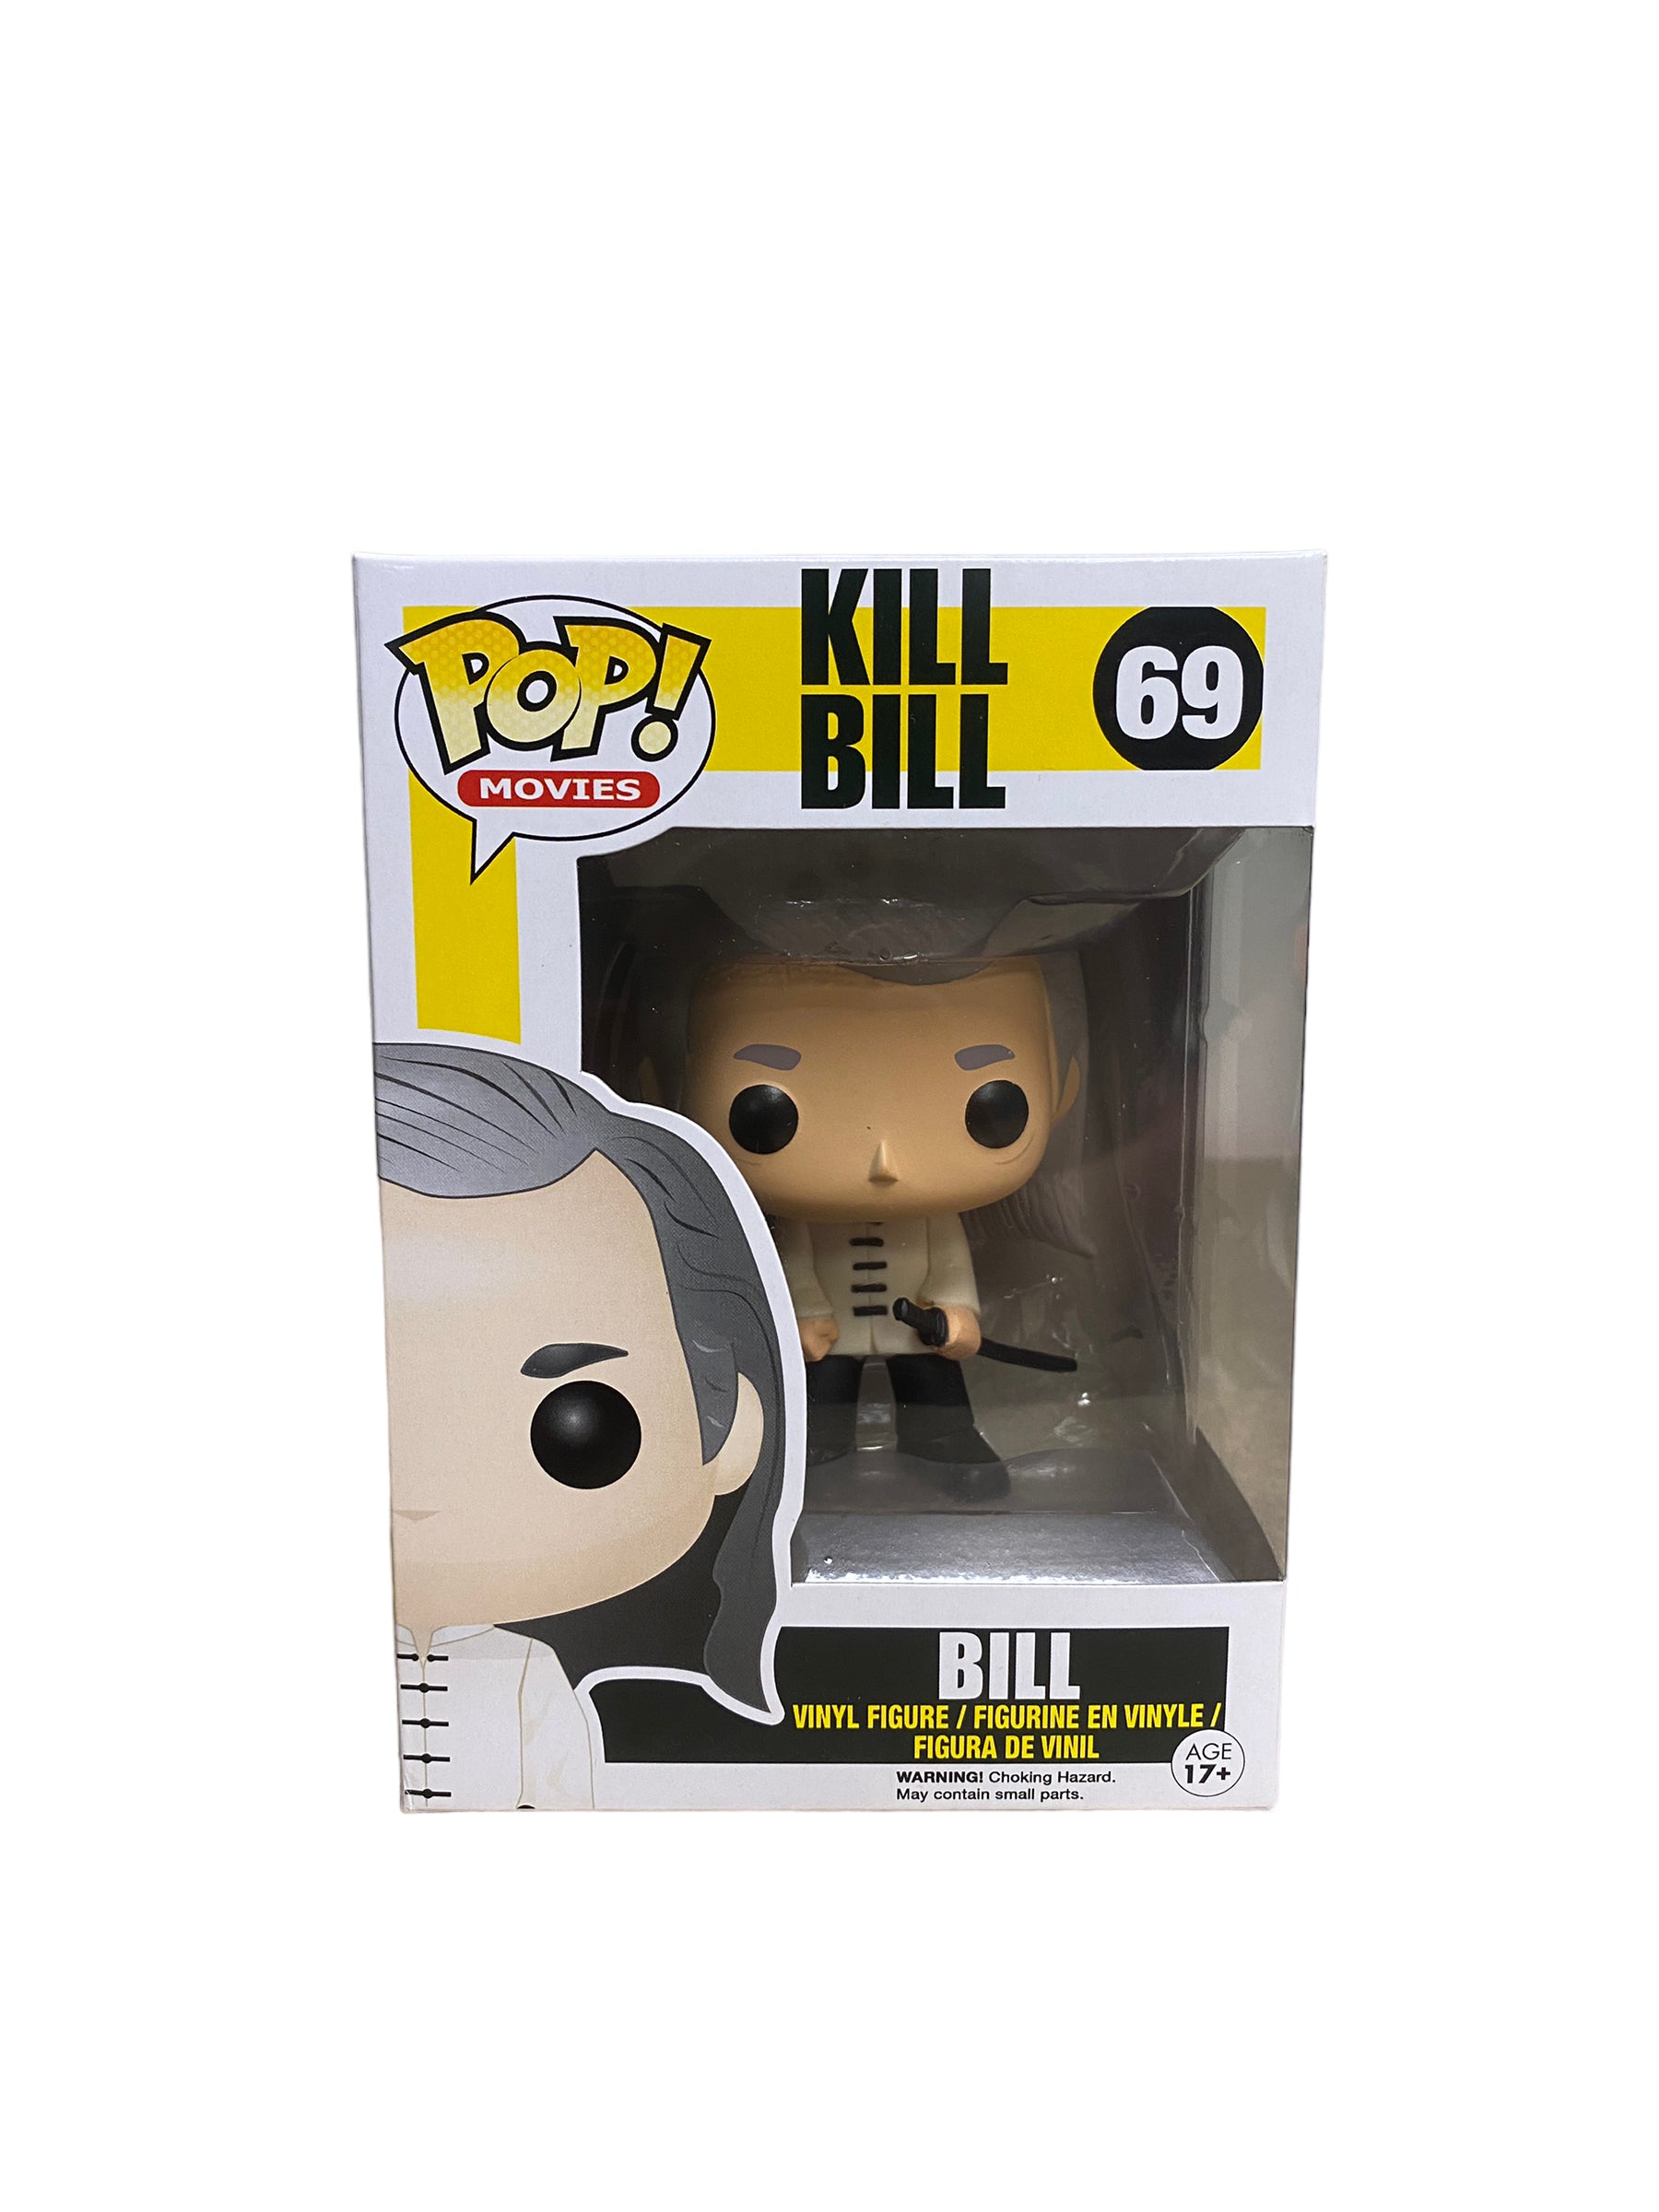 Bill #69 Funko Pop! - Kill Bill - 2014 Pop! - Condition 8.75/10